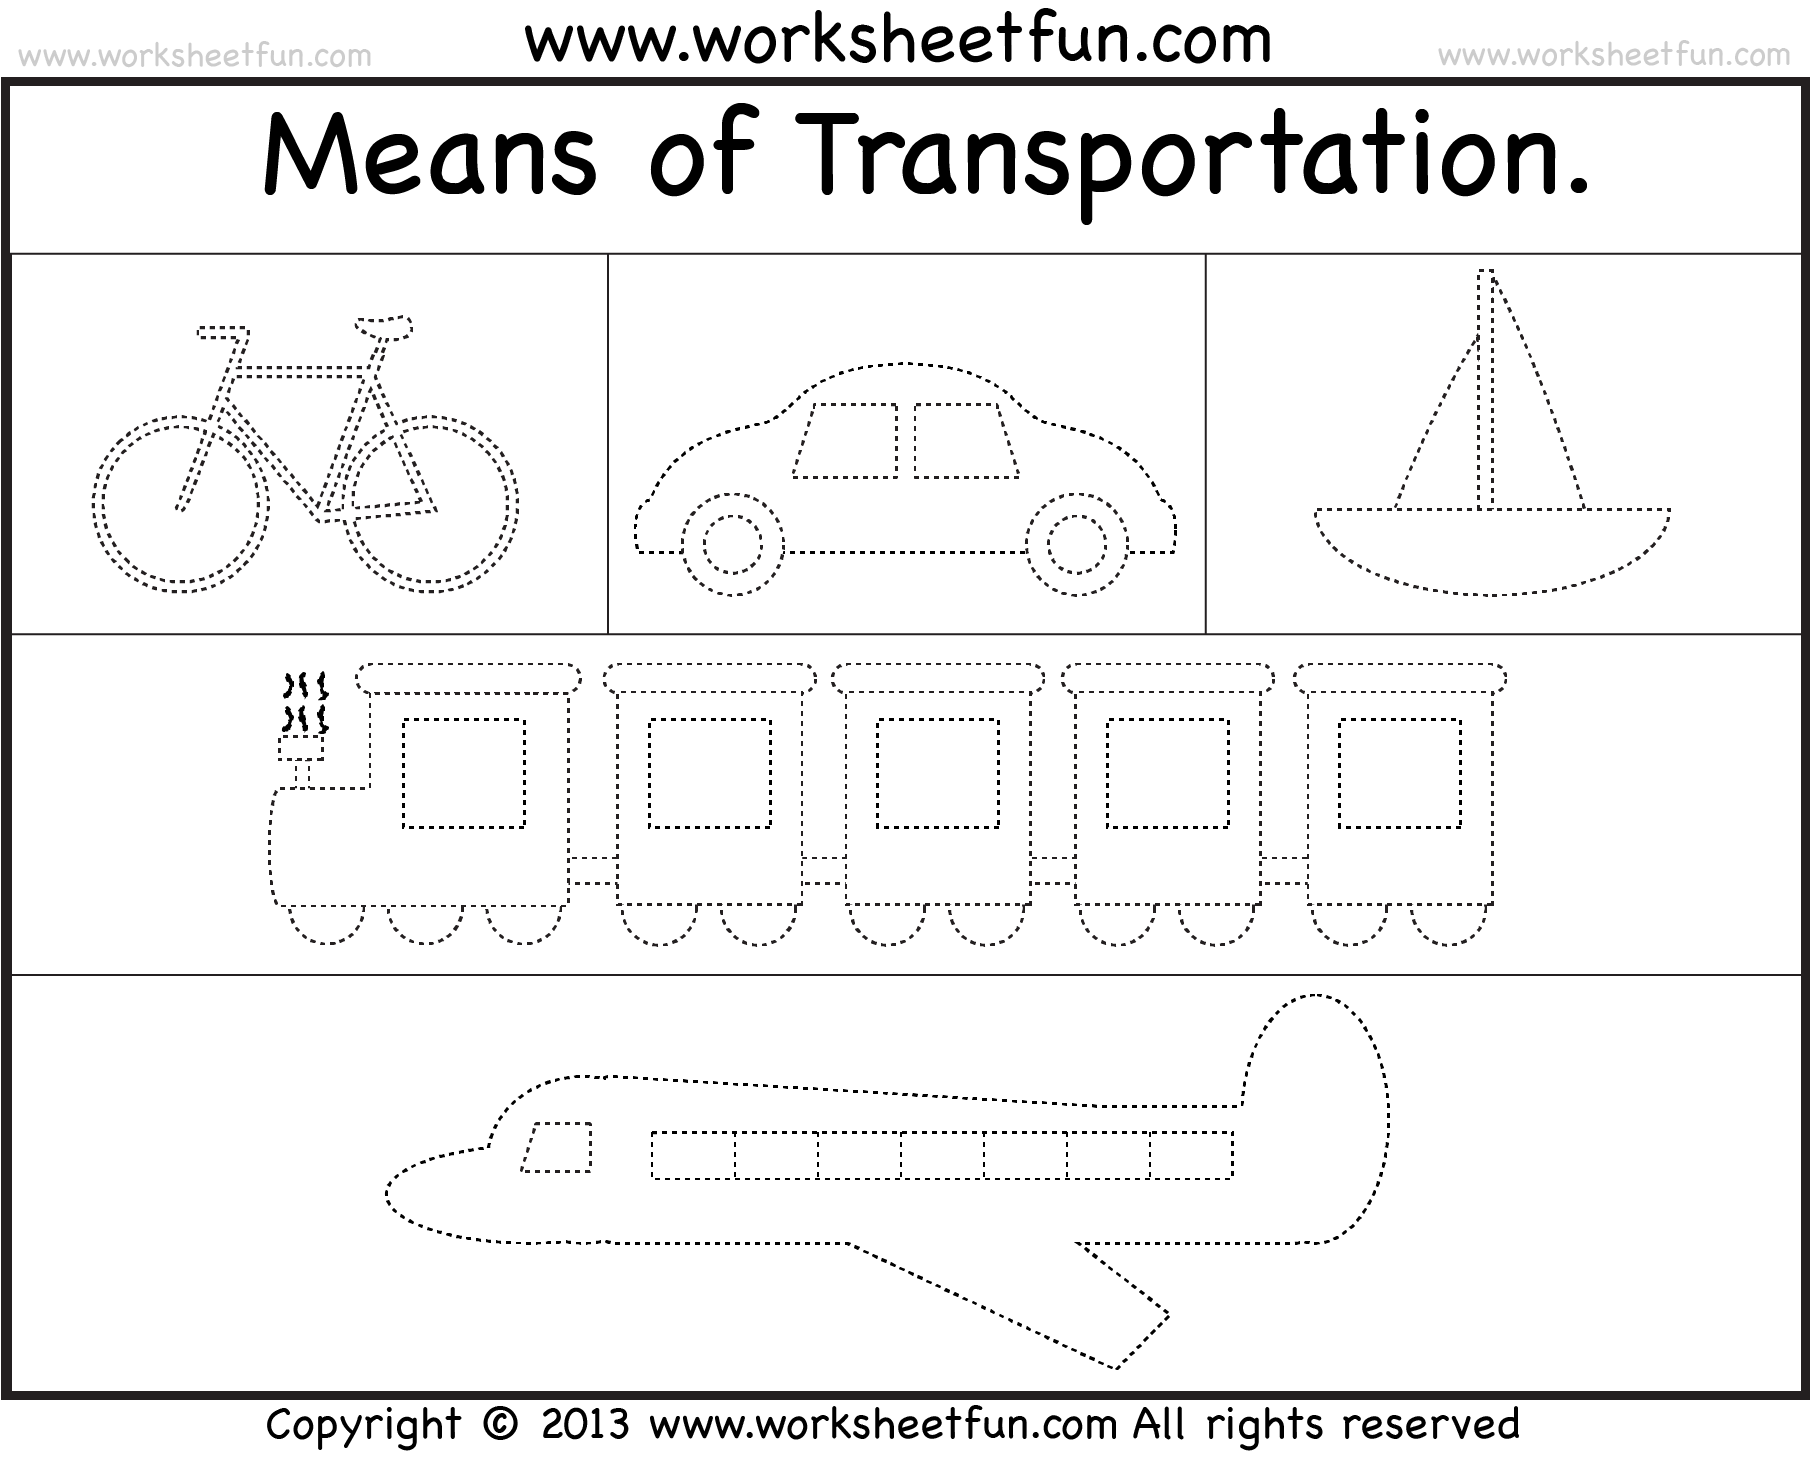 Means of transportation